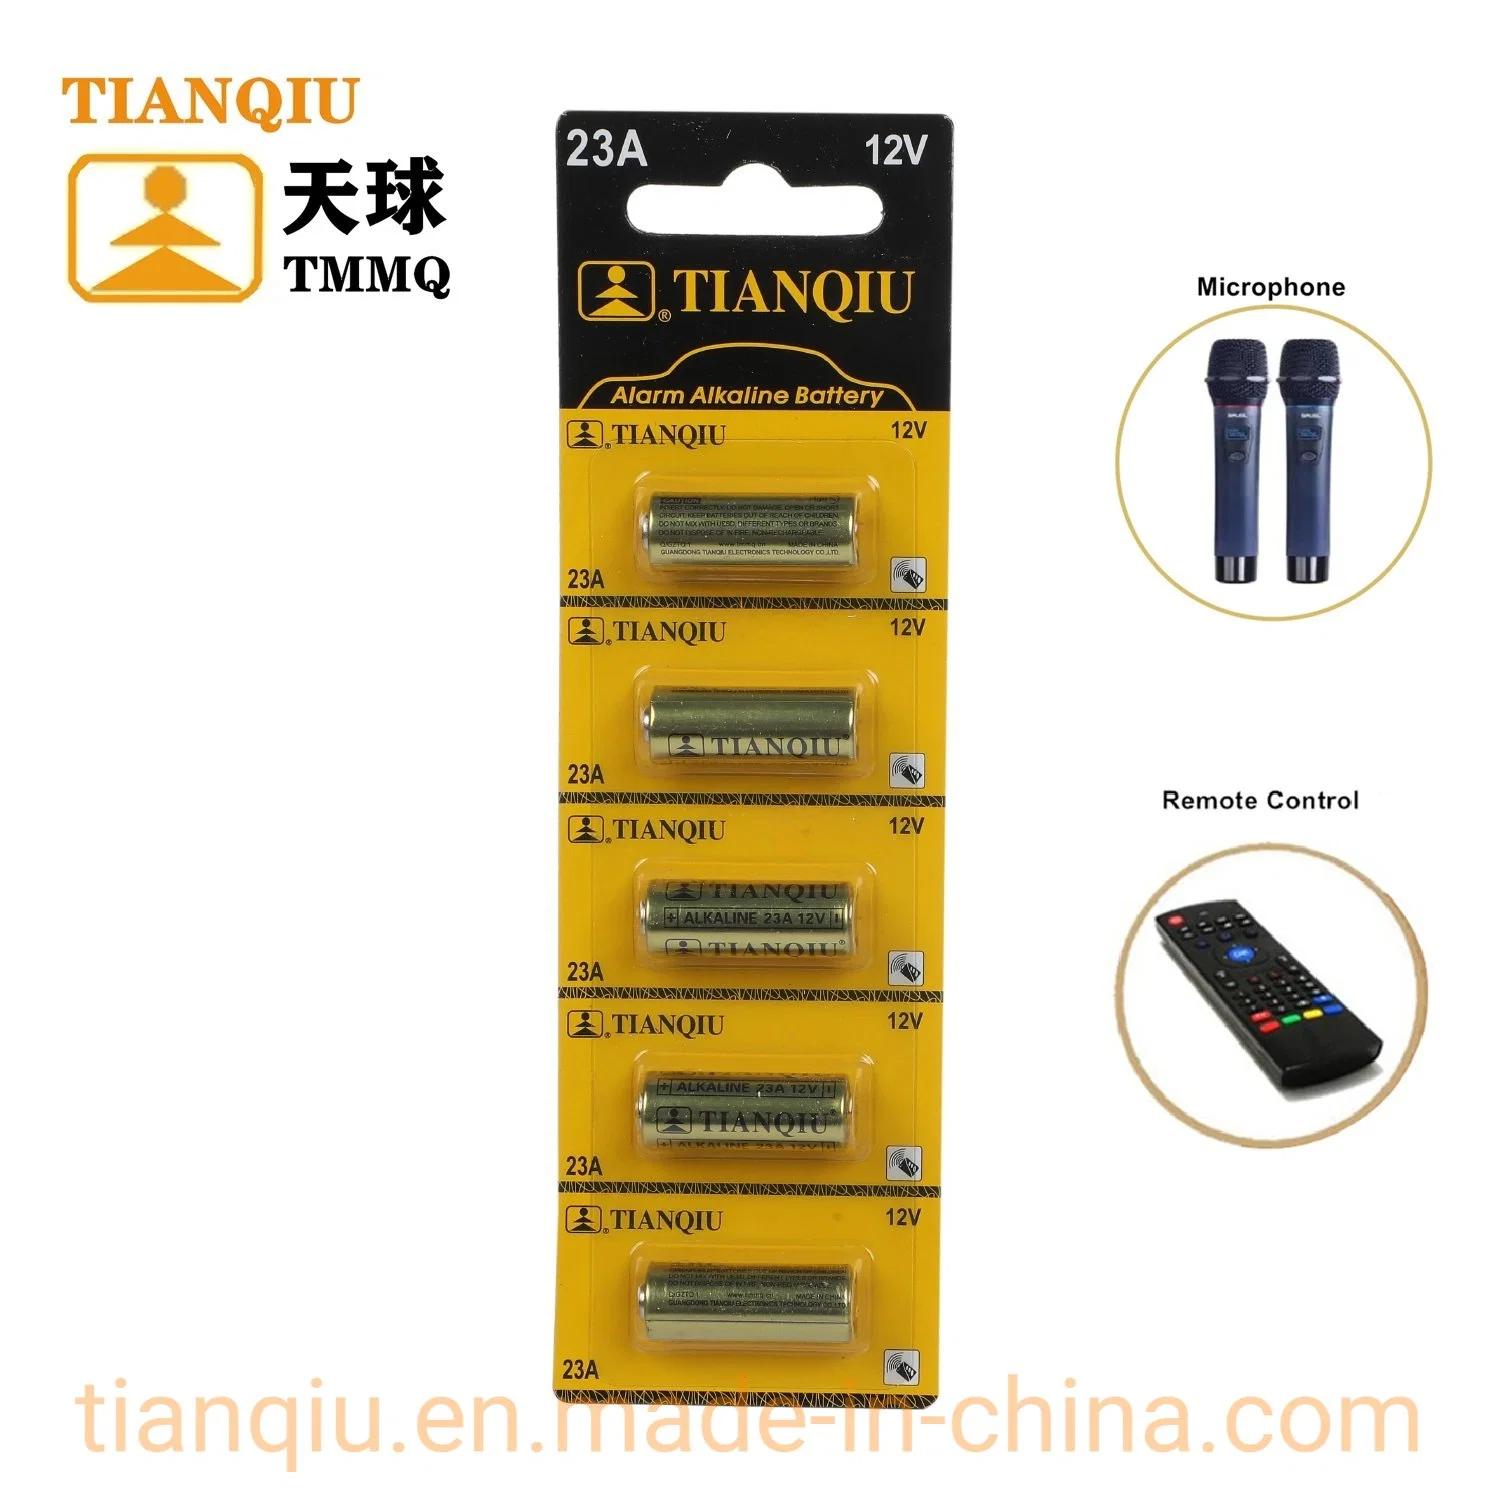 Tianqiu 23A Alkaline Battery 12V Clock Button Cell Dry Battery Reloj Pilas